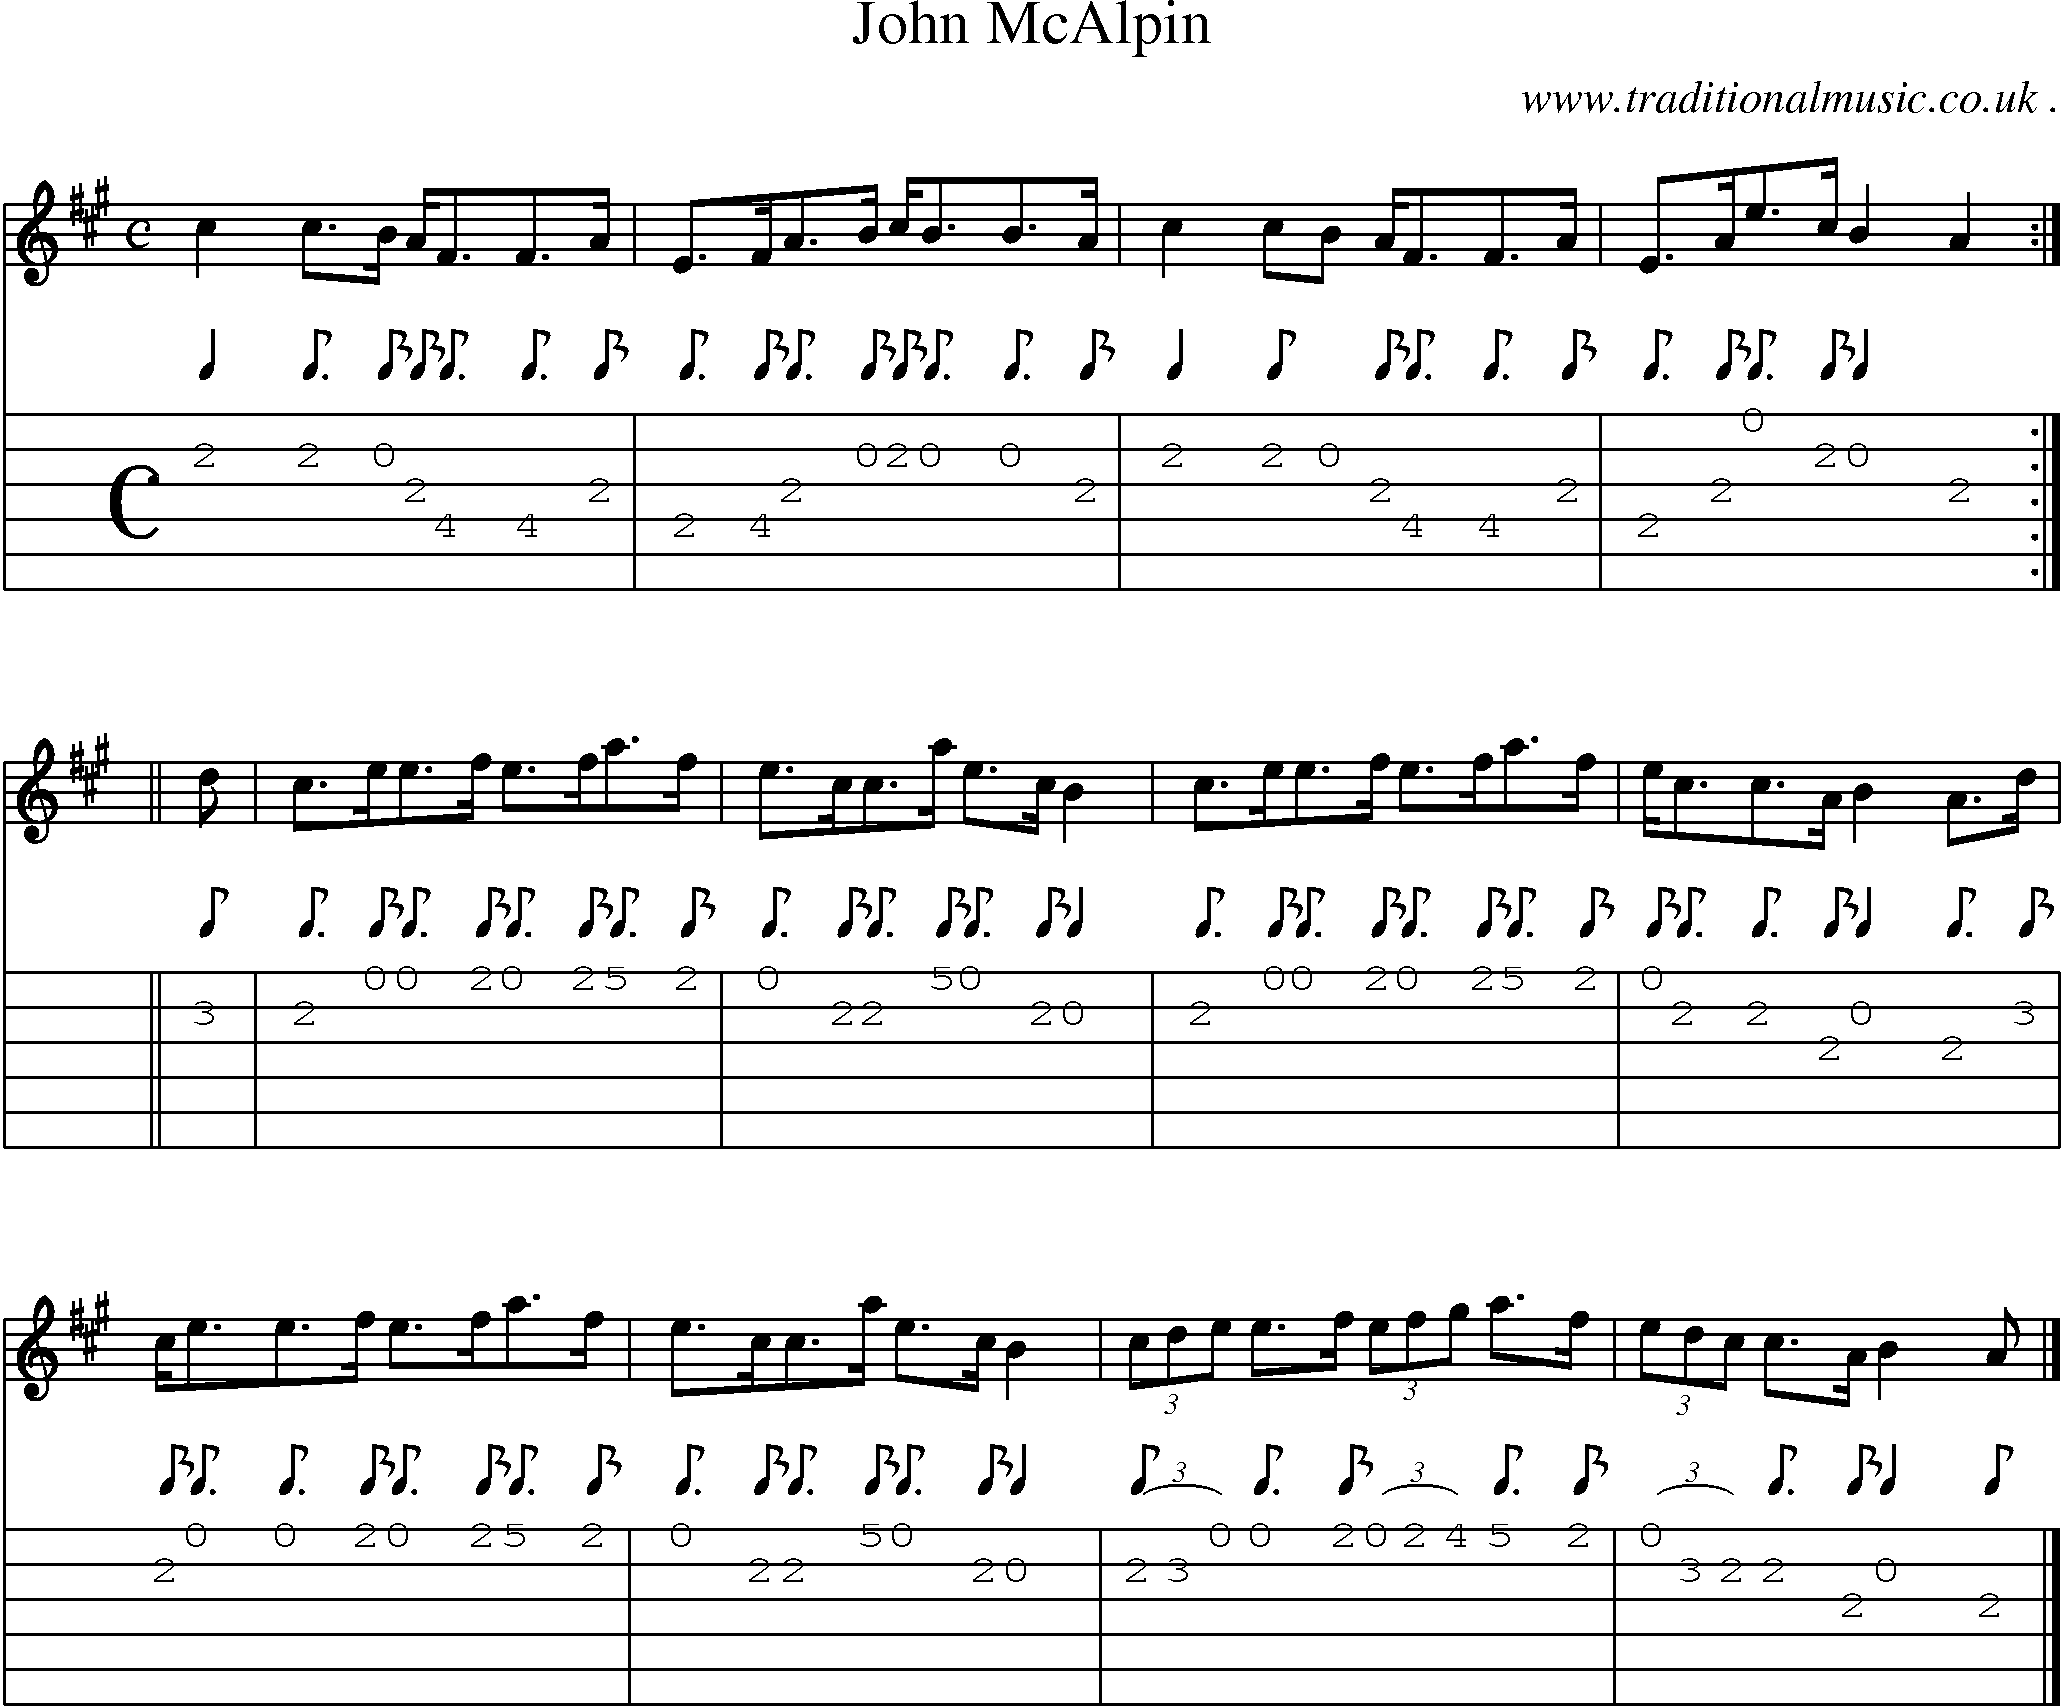 Sheet-music  score, Chords and Guitar Tabs for John Mcalpin